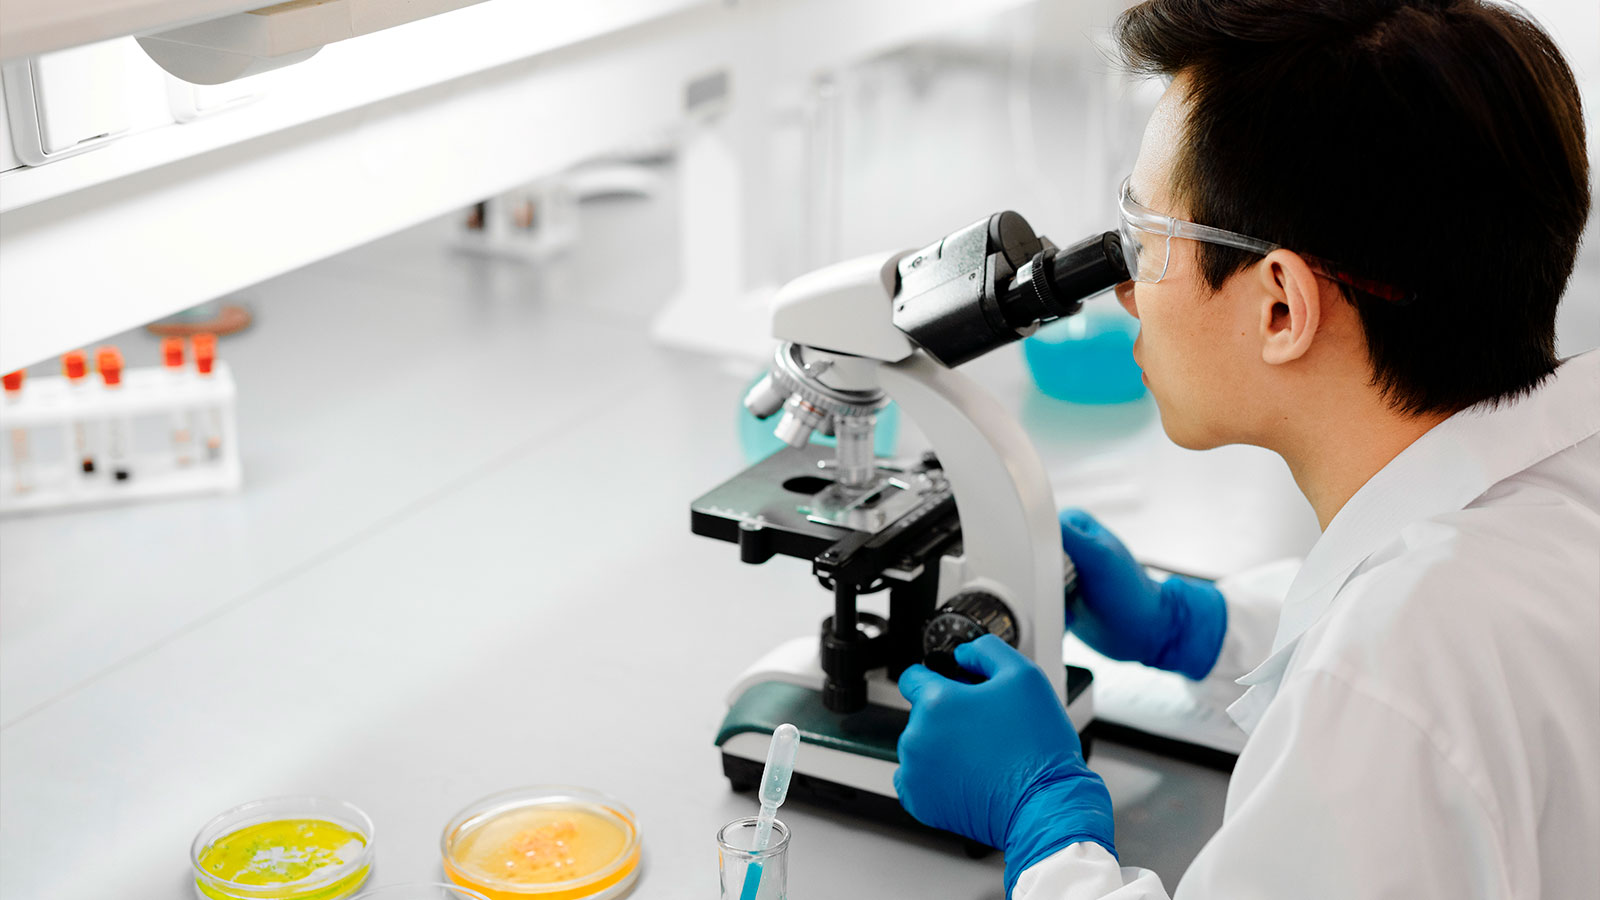 A man examining fluid under a microscope in a lab